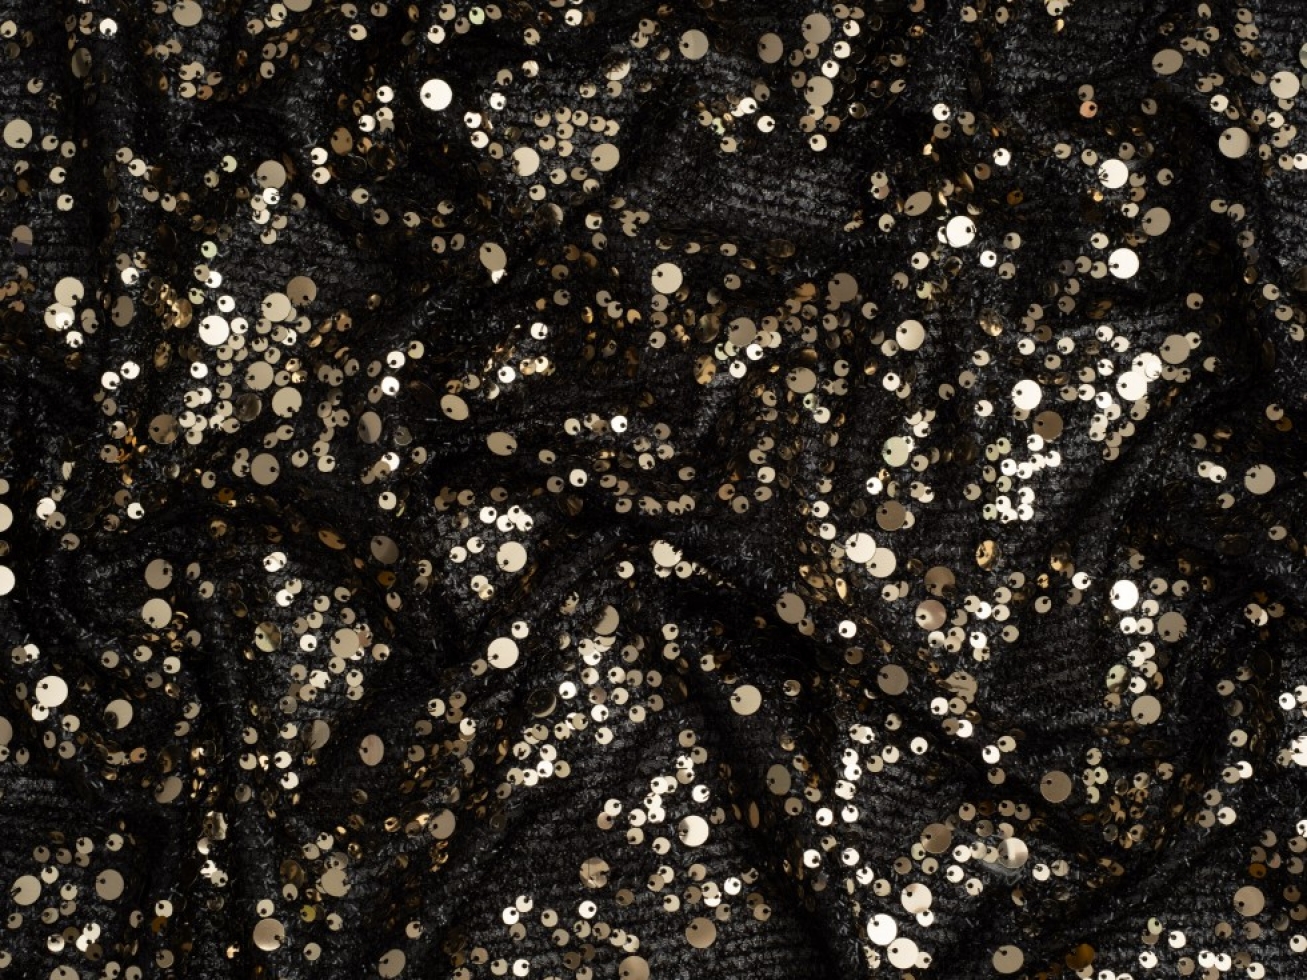 Minerva Core Range Casablanca Sequin Fur Texture Mesh Fabric Black & Gold